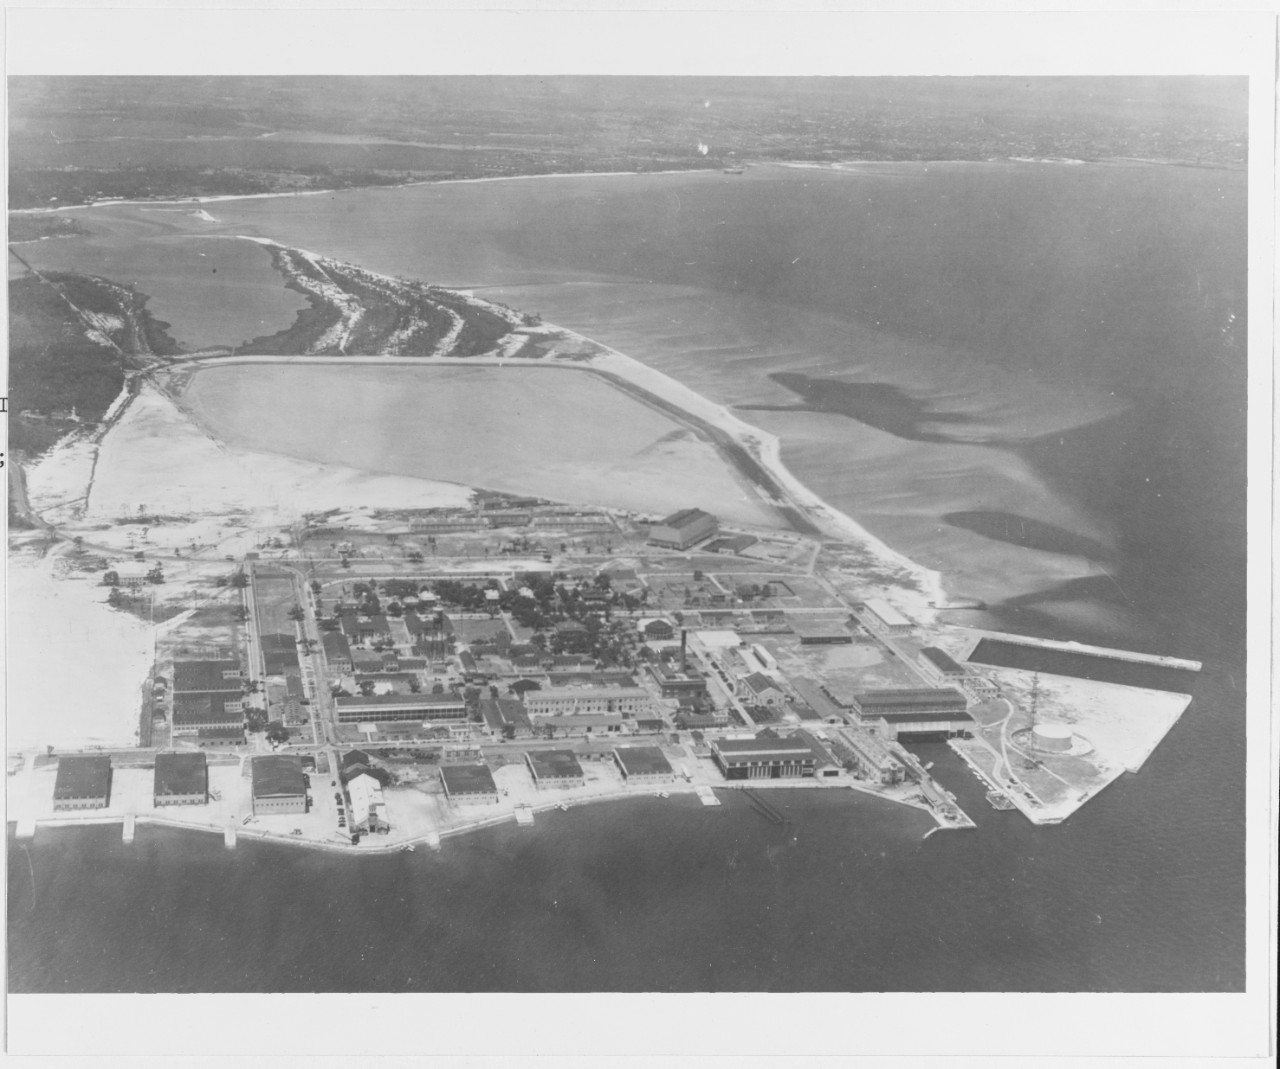 Naval Air Station Pensacola, Florida